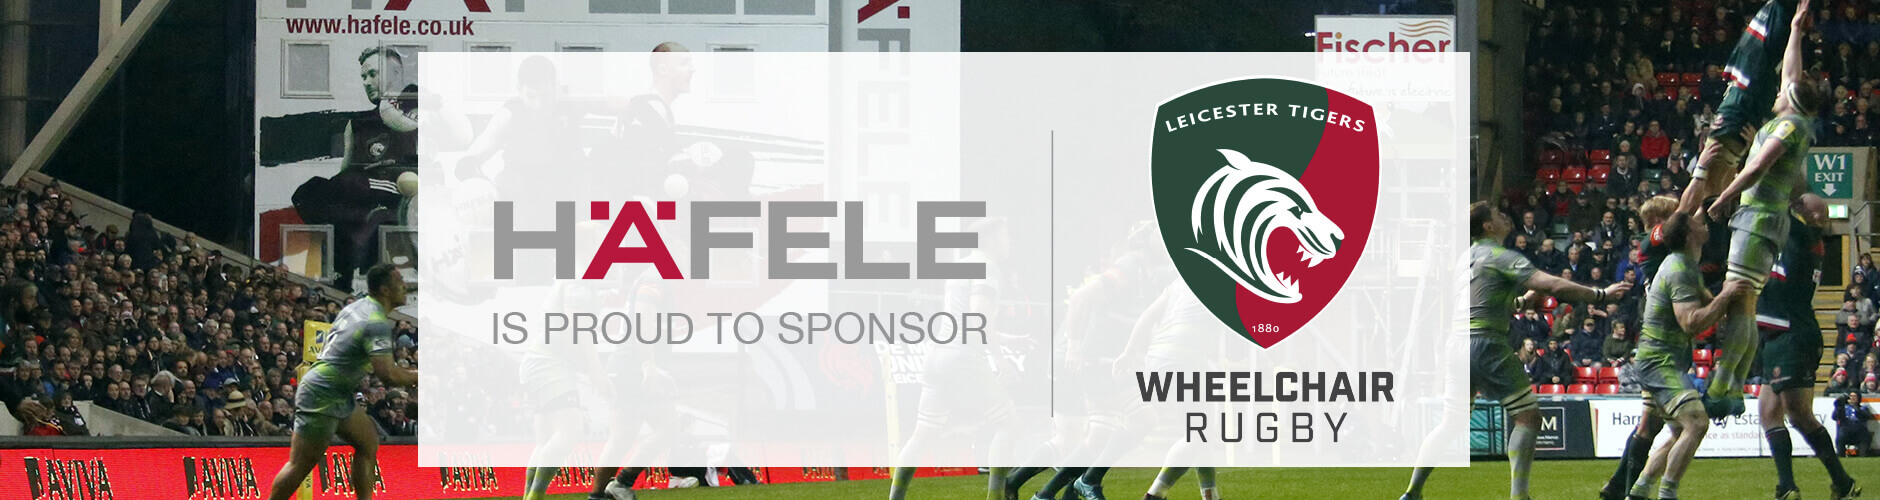 Häfele sponsors Leicester Tigers Wheelchair Rugby Team